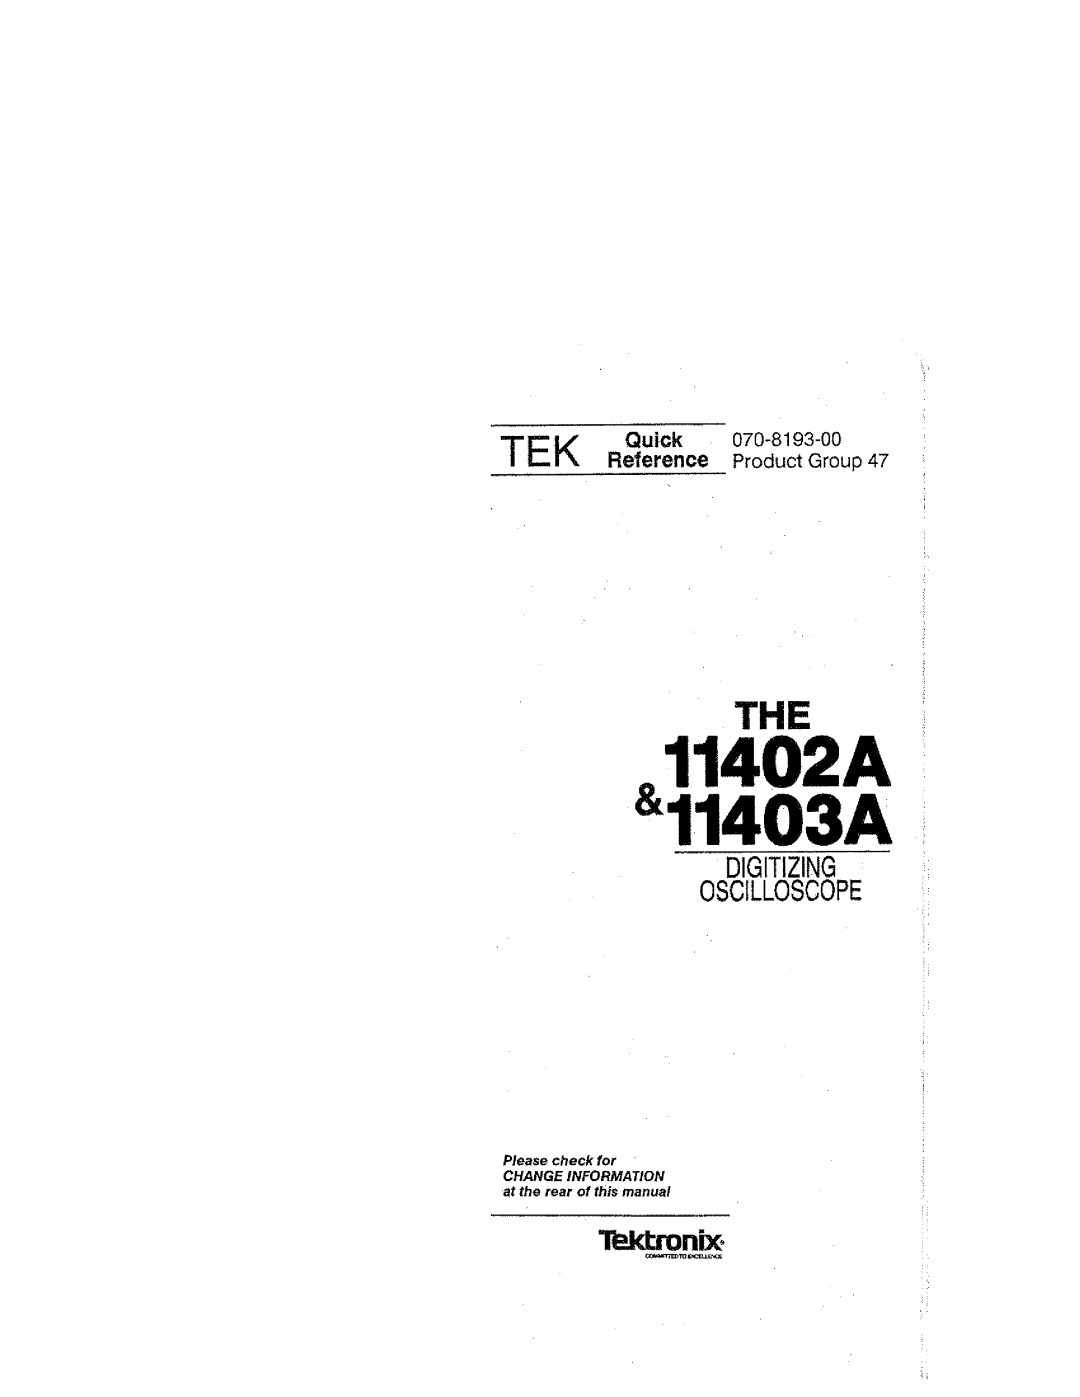 Tektronix 11403A, 11402A manual 